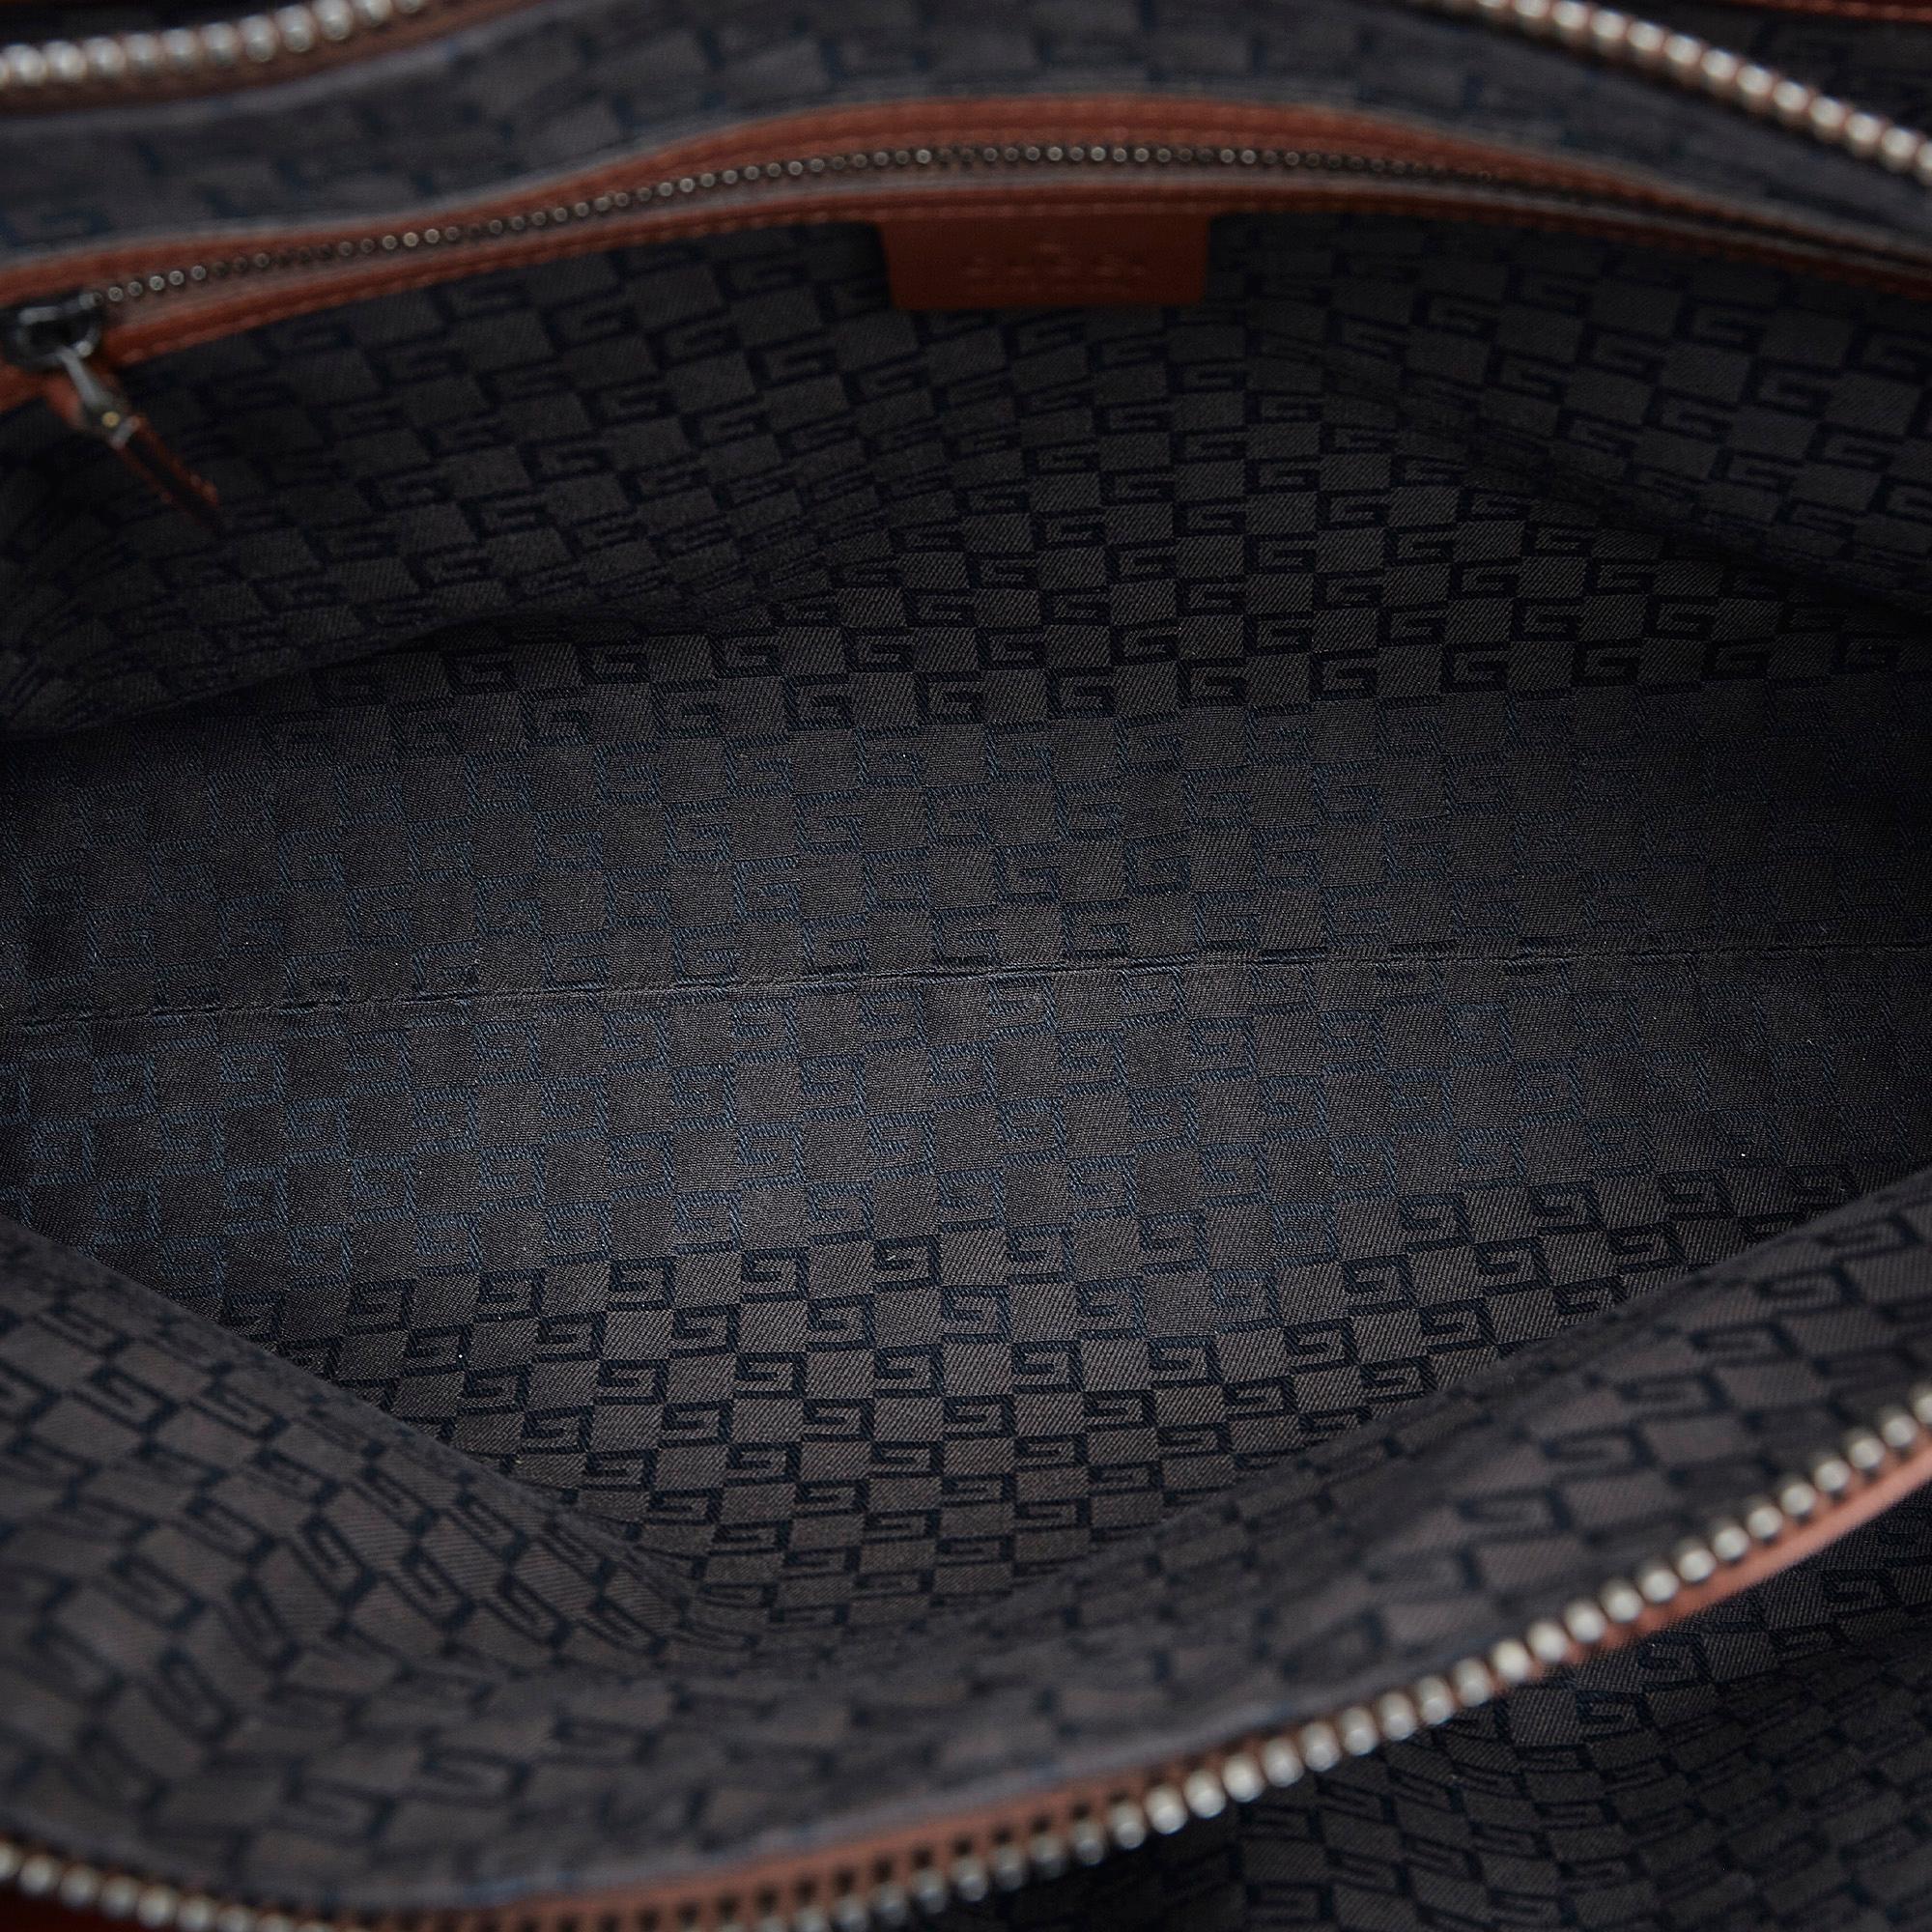 Gucci Whipstitch Wood Handle Handbag